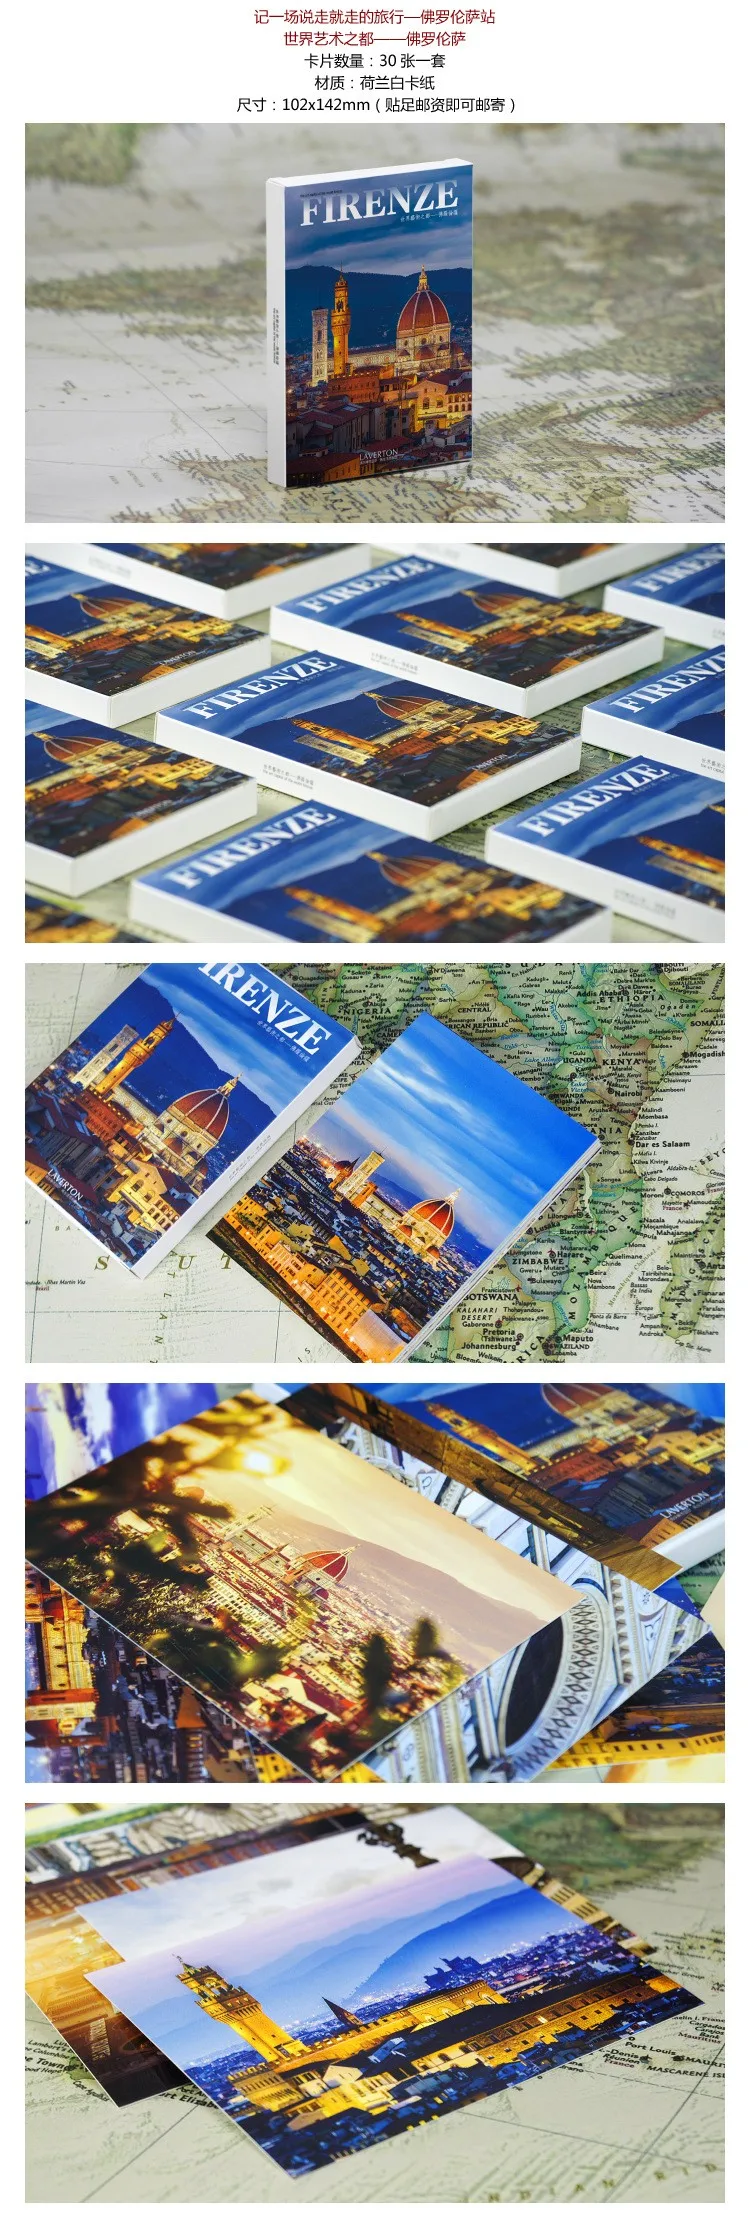 30 листов/LOT съездите в Firenze открытка/желание карта/мода подарок